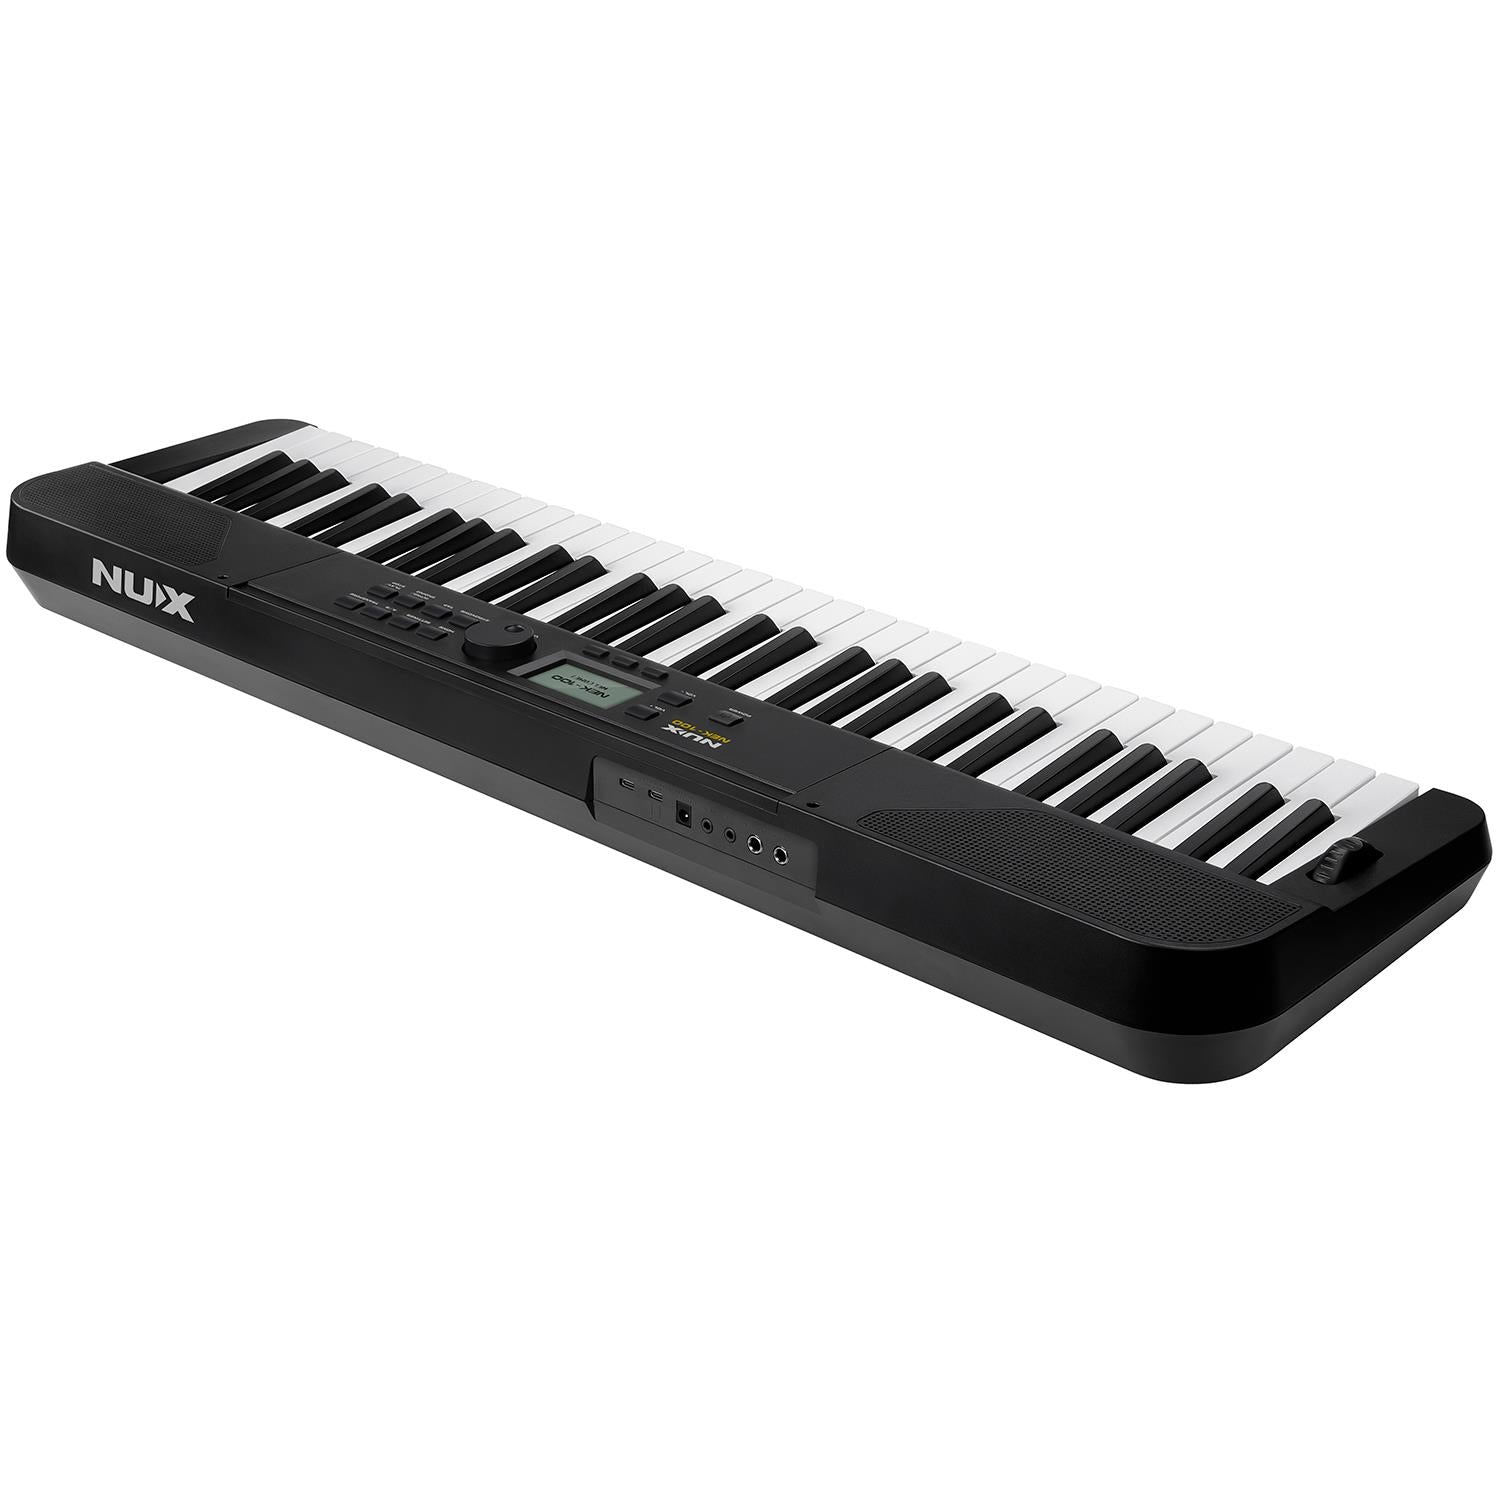 NUX NEK-100 61-Key Portable Keyboard